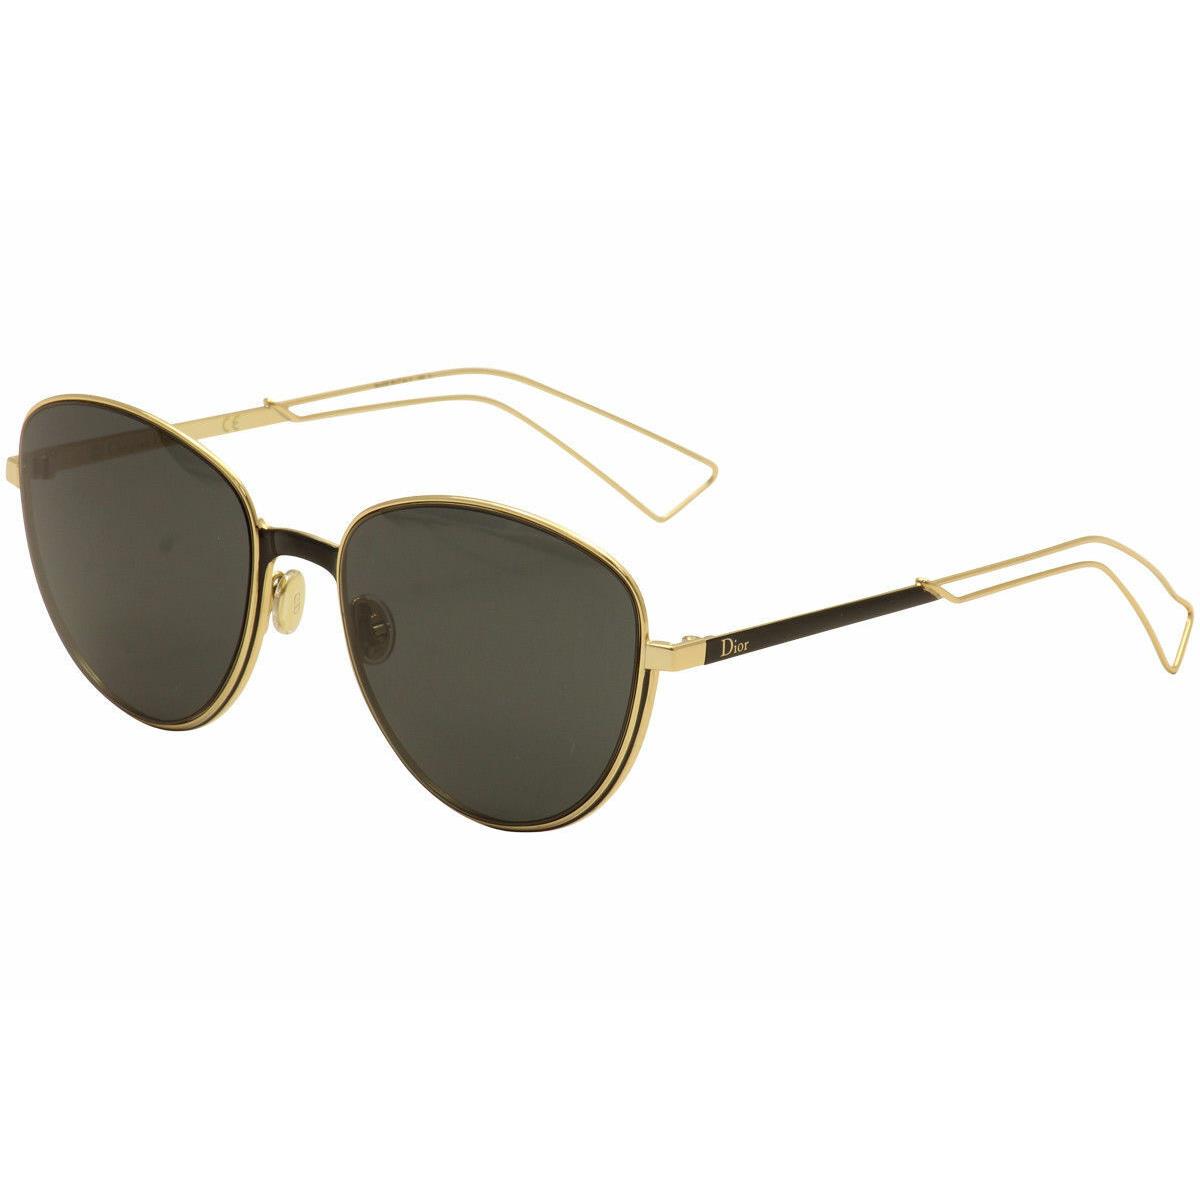 Christian Dior Women`s Ultradior/s RCW/Y1 Gold/matte Black Sunglasses 56mm - Gold Black, Frame: Gold/ Matte Black, Lens: Grey